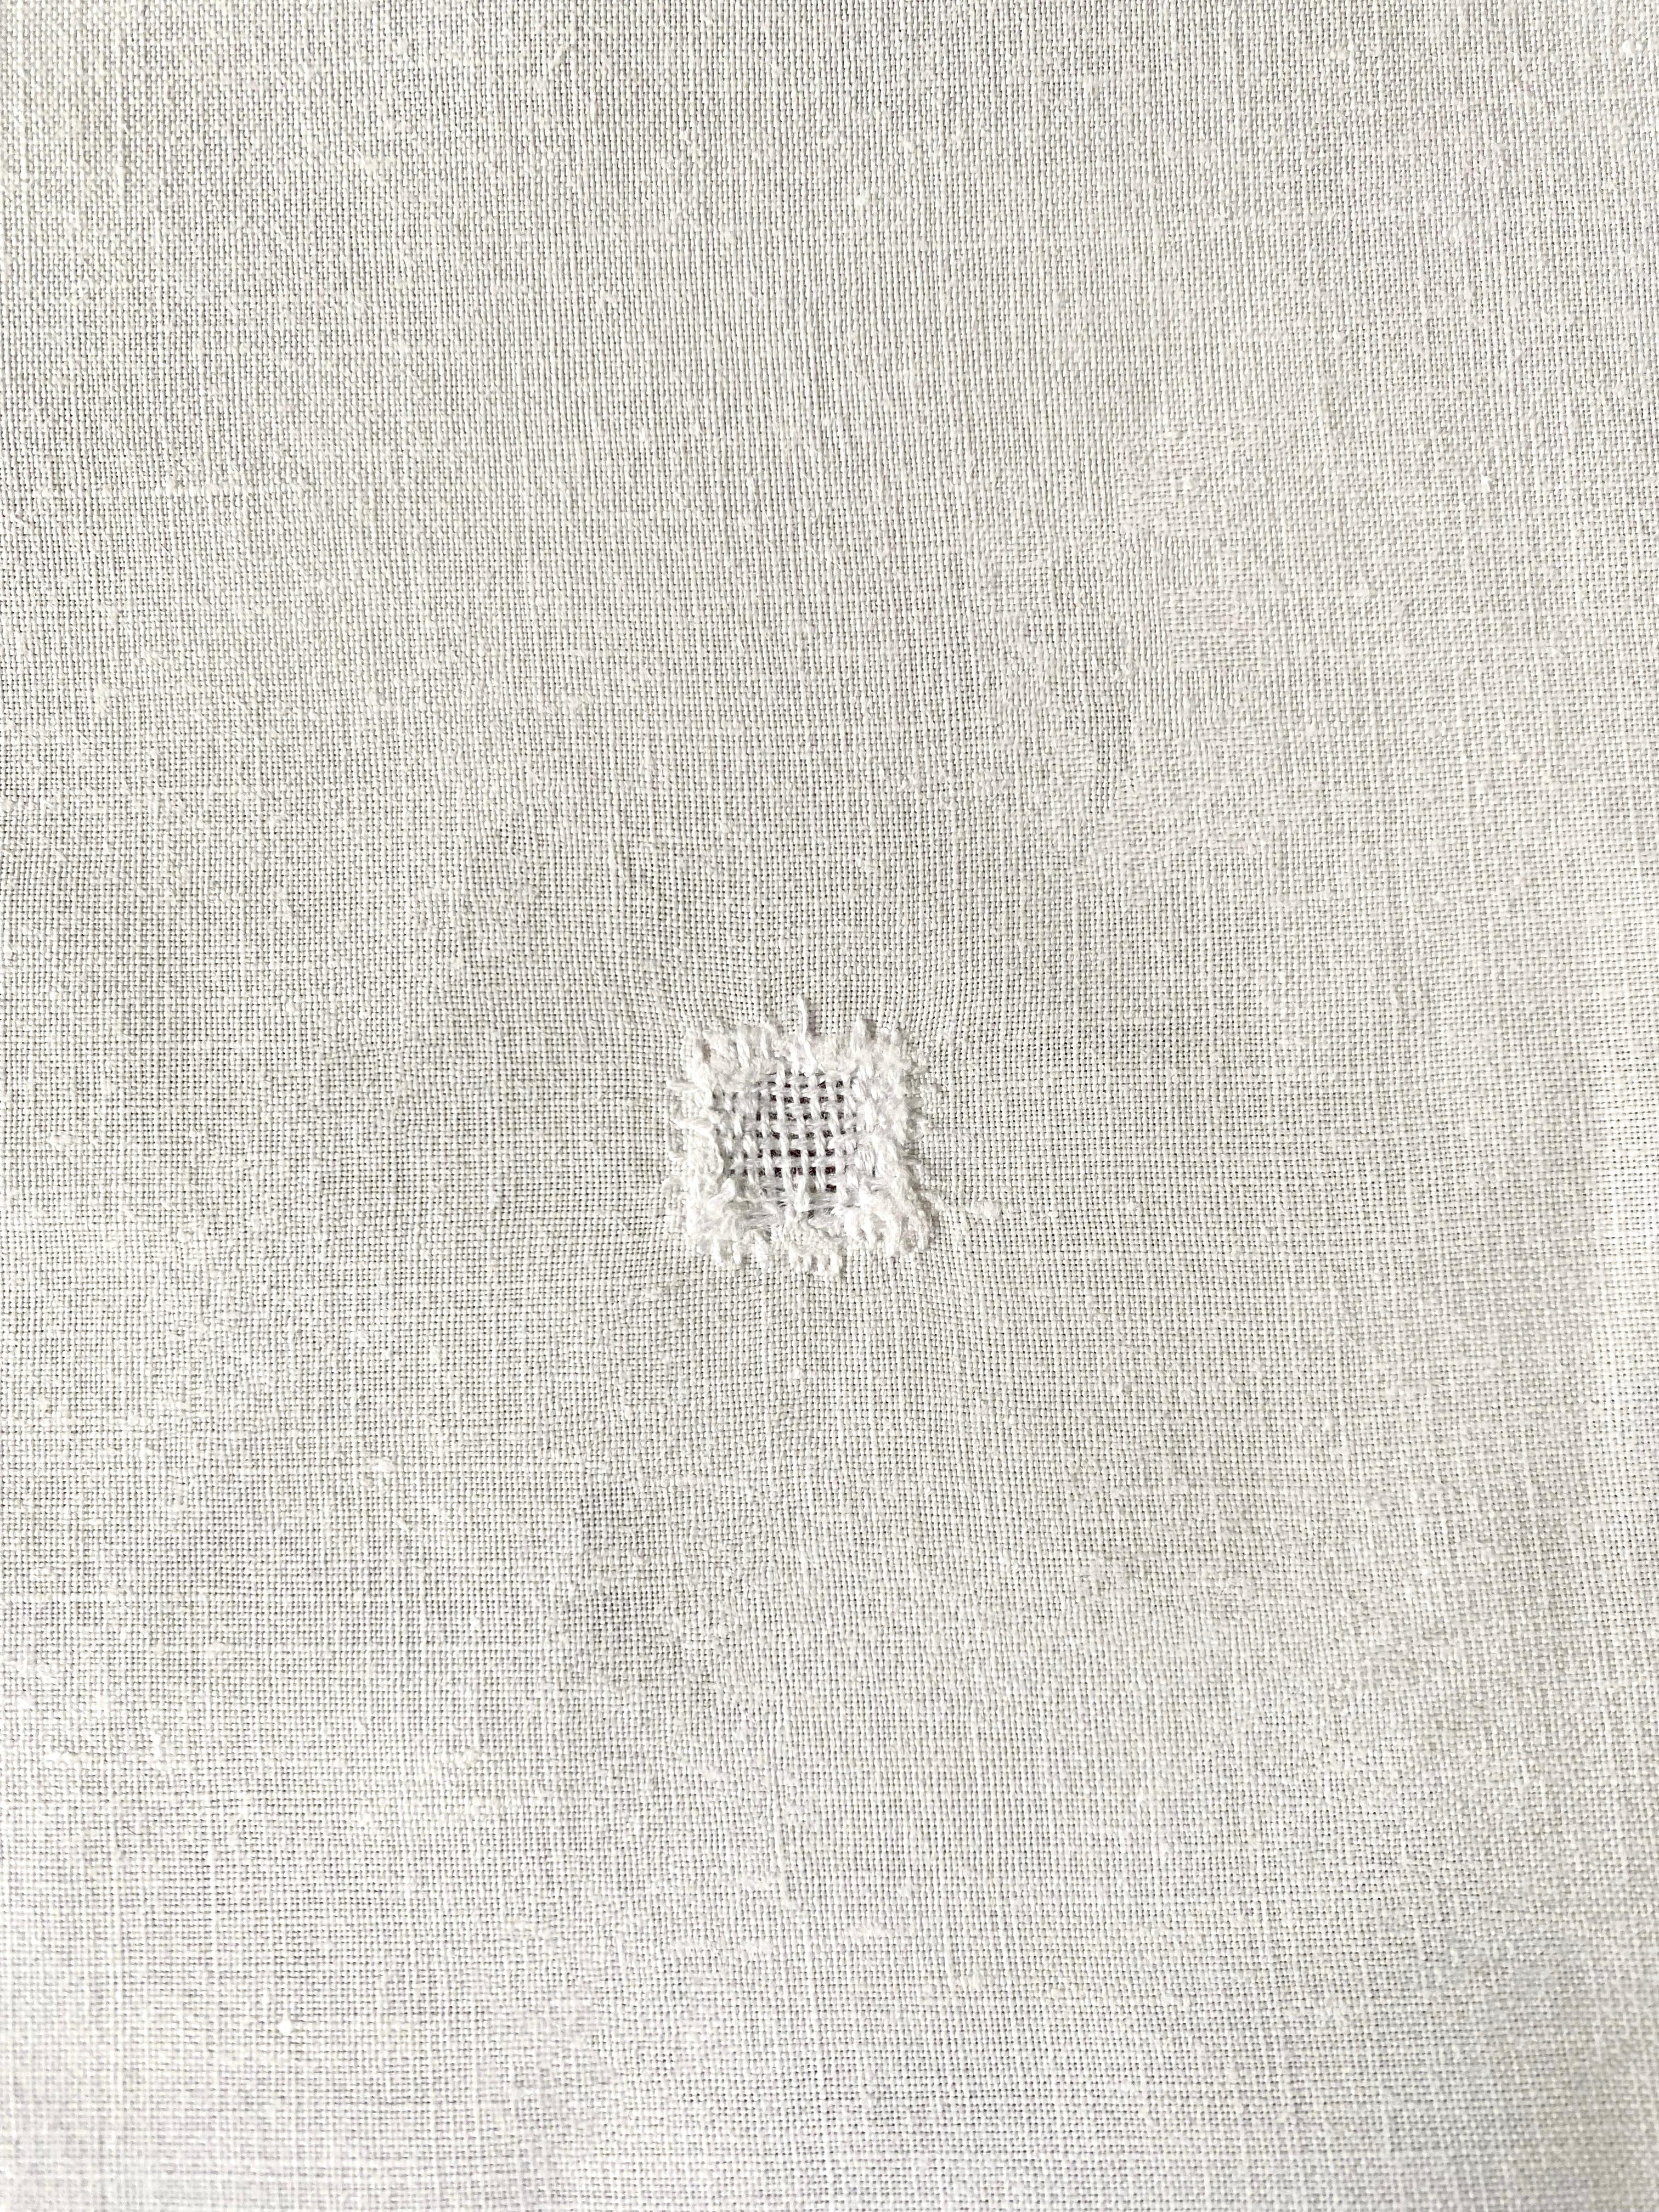 monogram white linen fabric table napkin pricelist